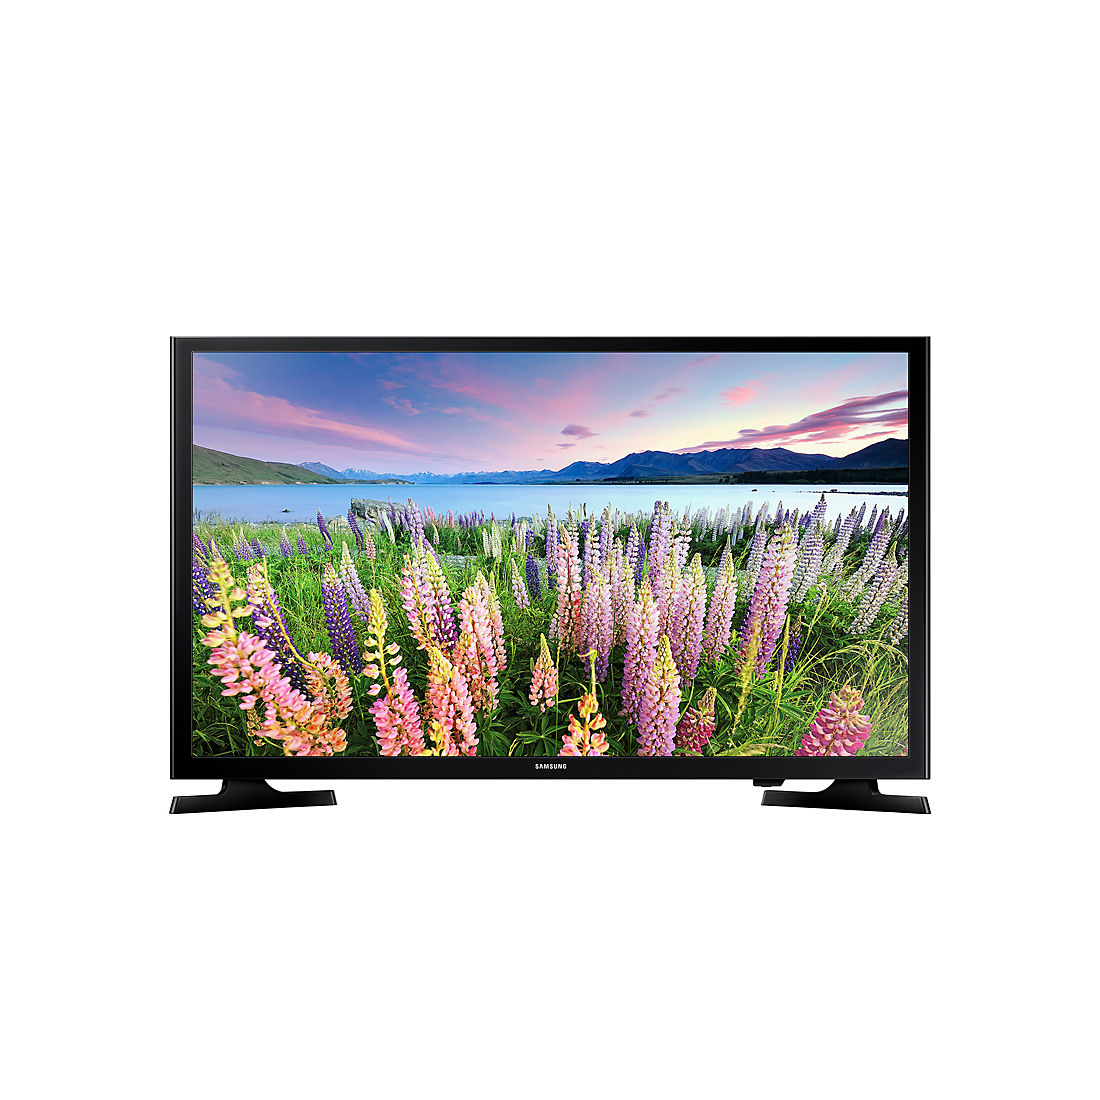 his hue At dawn Samsung 40" N5200 Series HD Smart TV - BJ's Wholesale Club